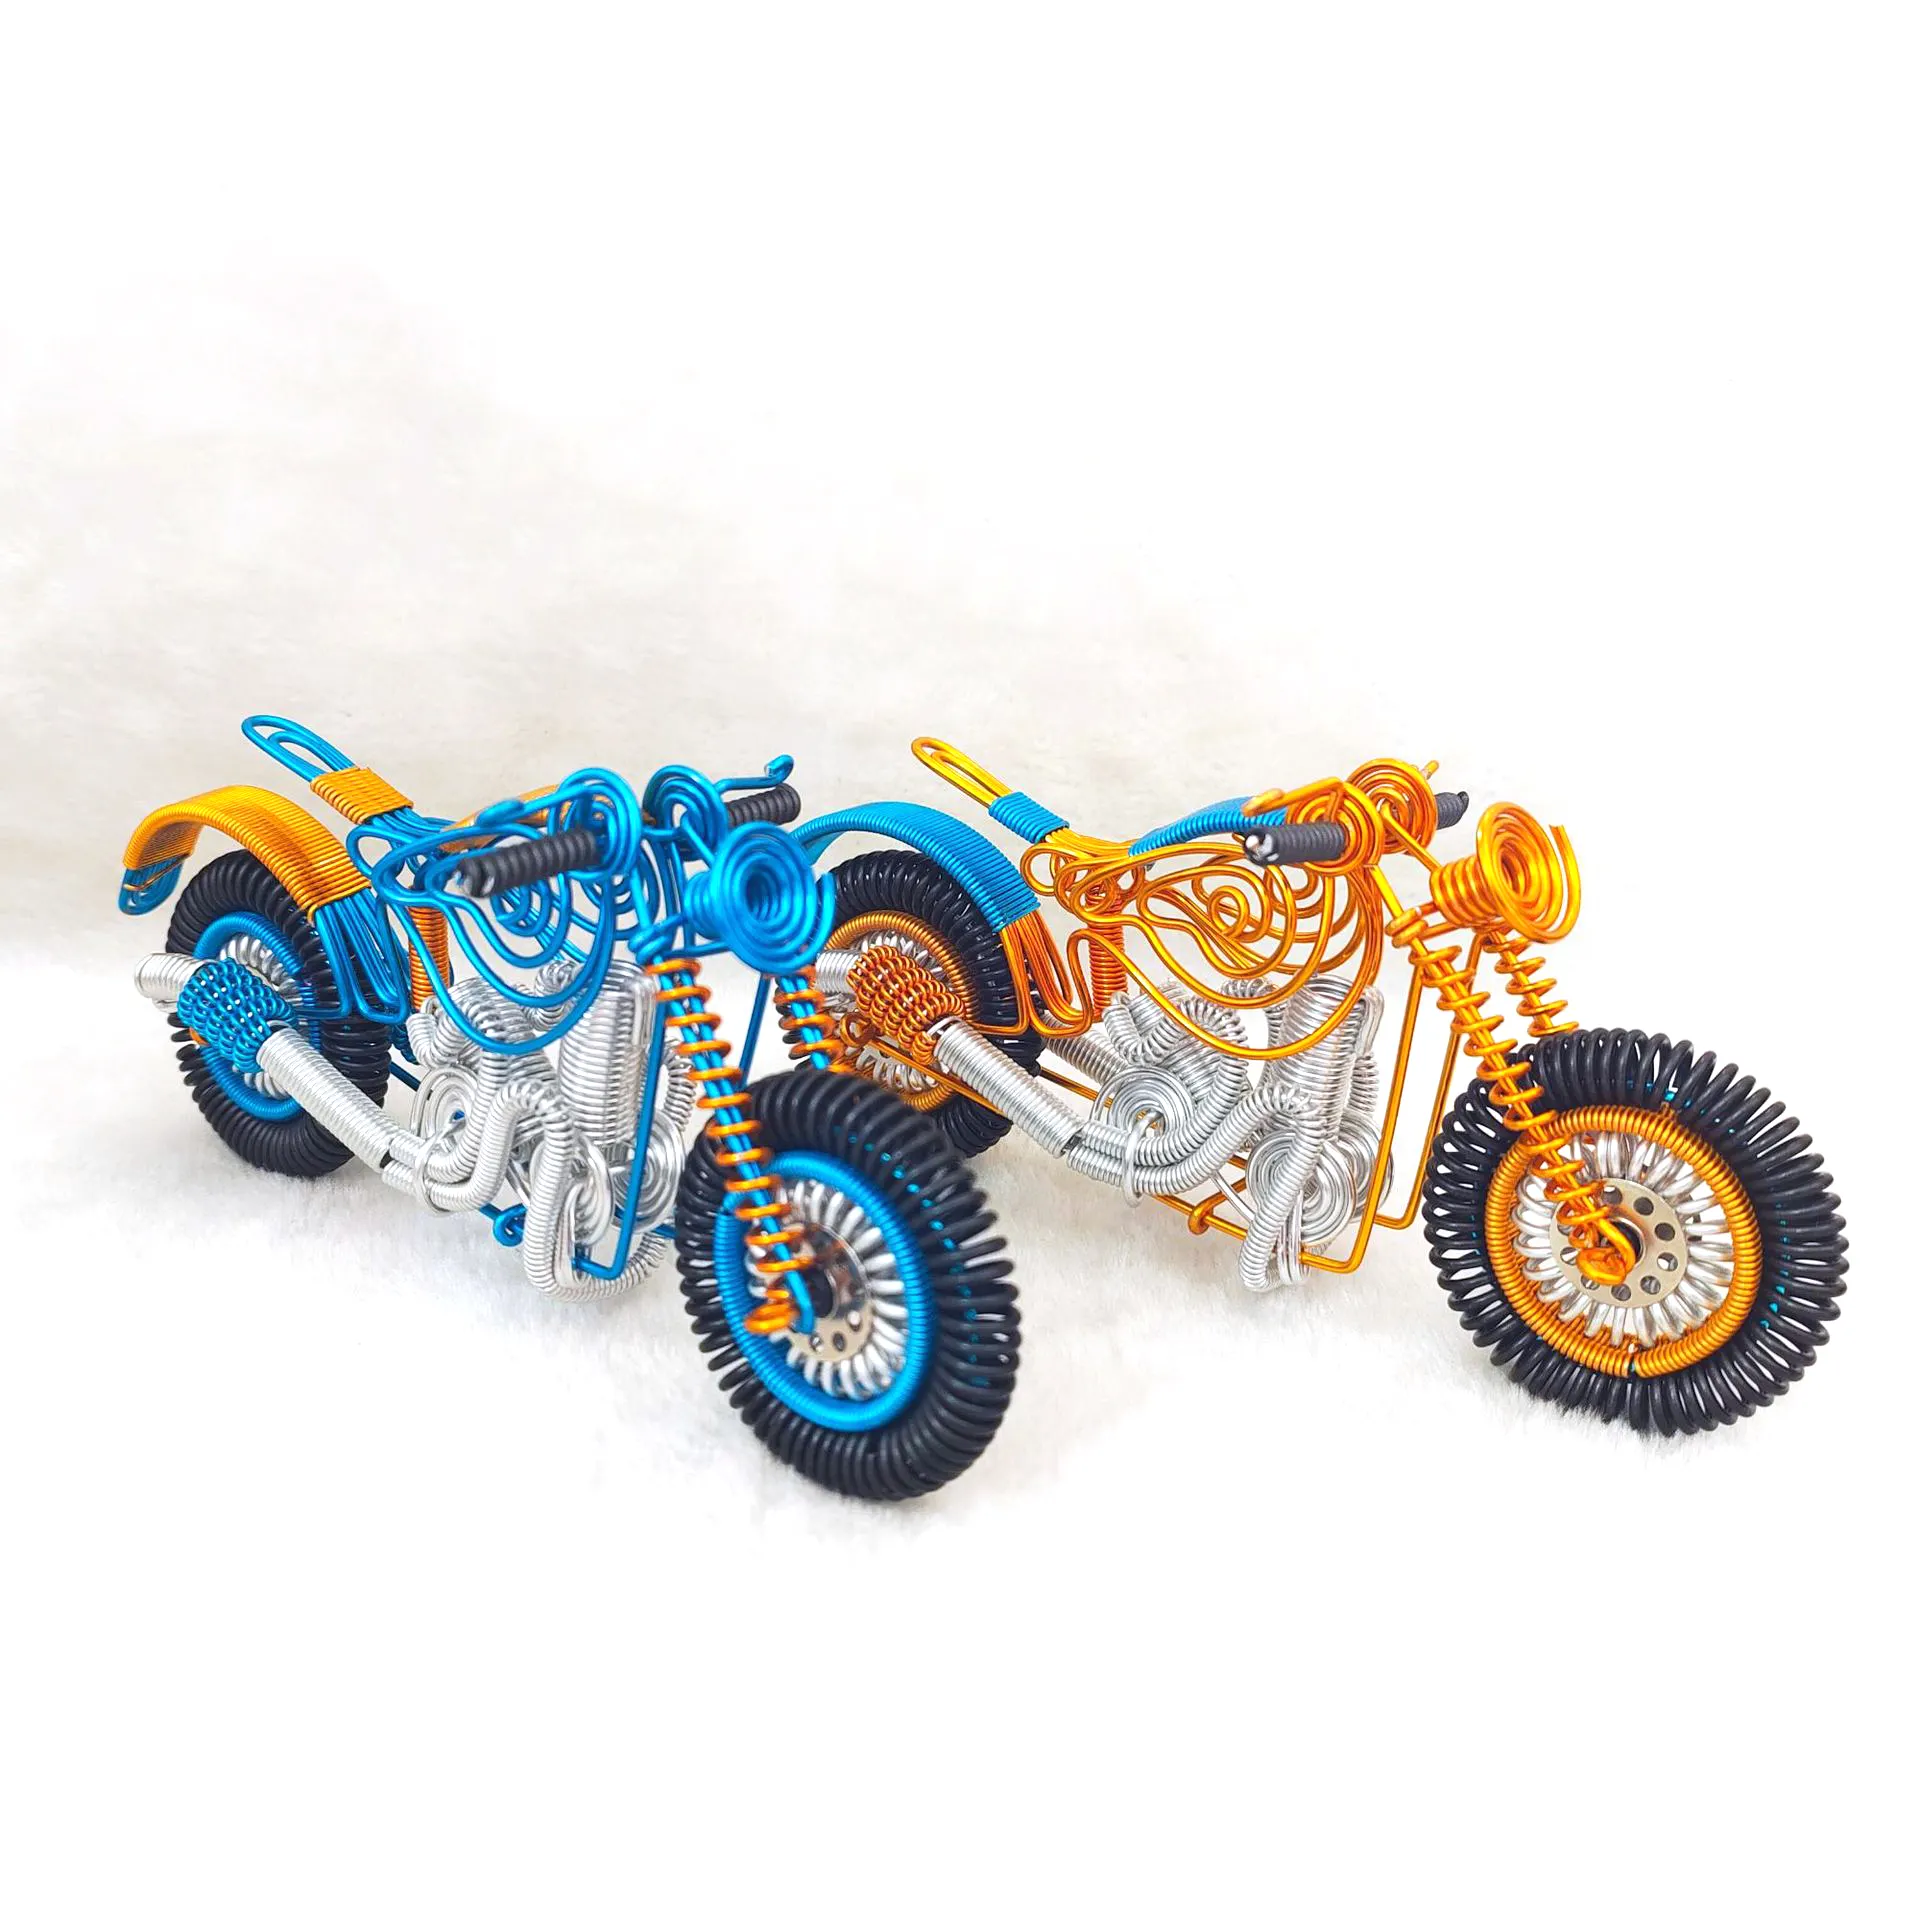 Aus gezeichnetes Kunst handwerk Kreatives Aluminiumdraht-Motorrad modell